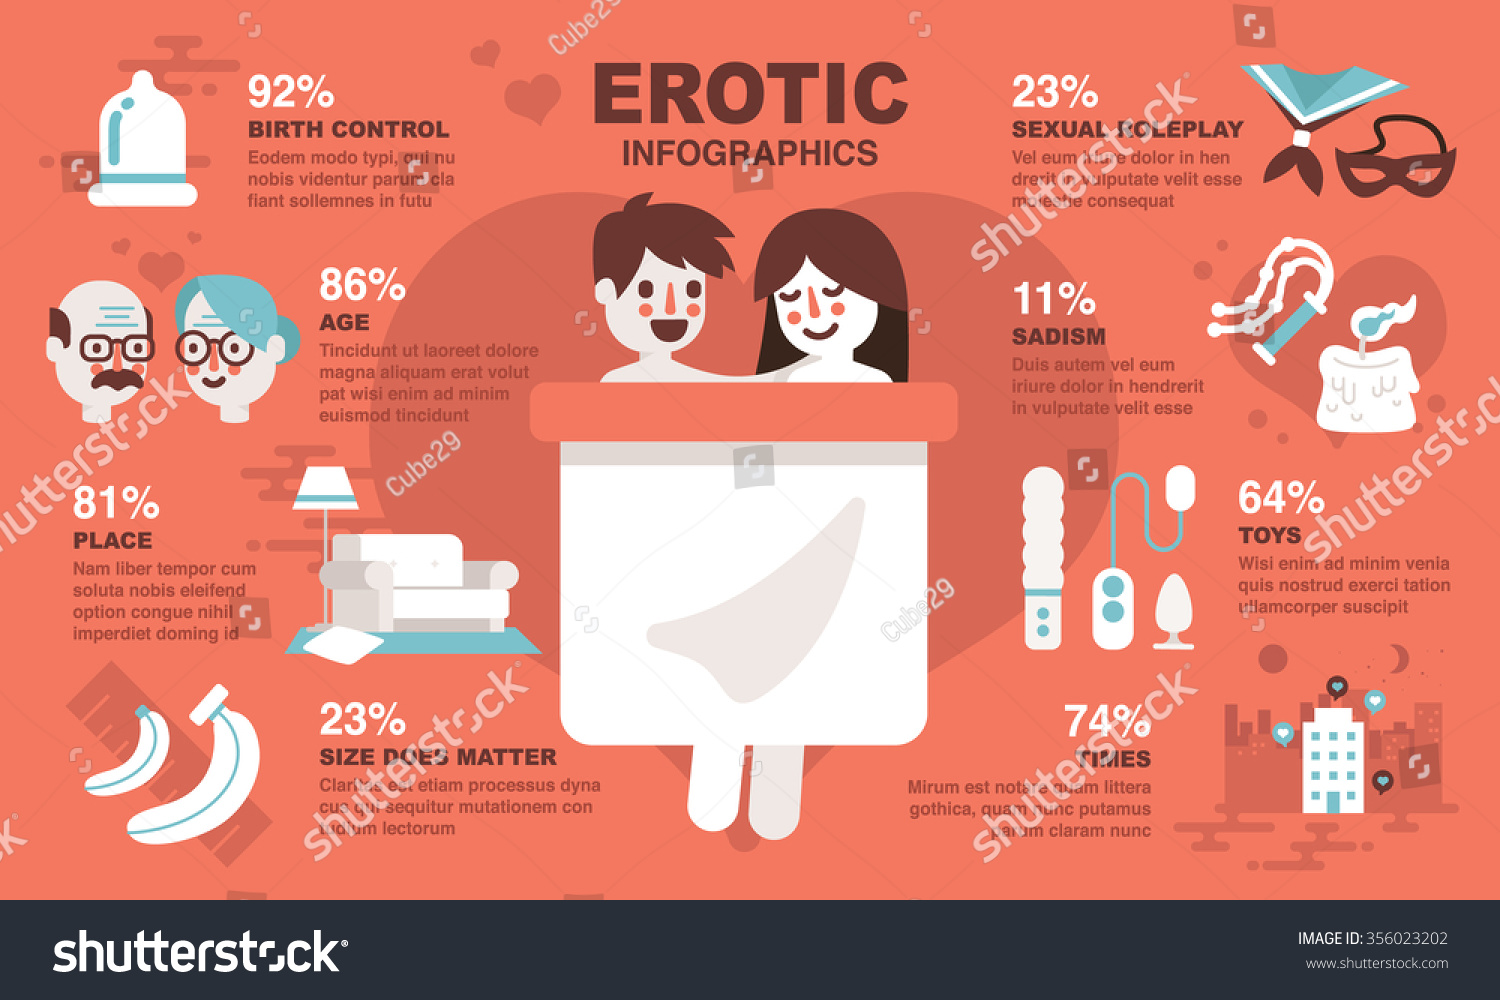 Erotic Infographics Included Graphic Data Info: стоковая векторная графика ...